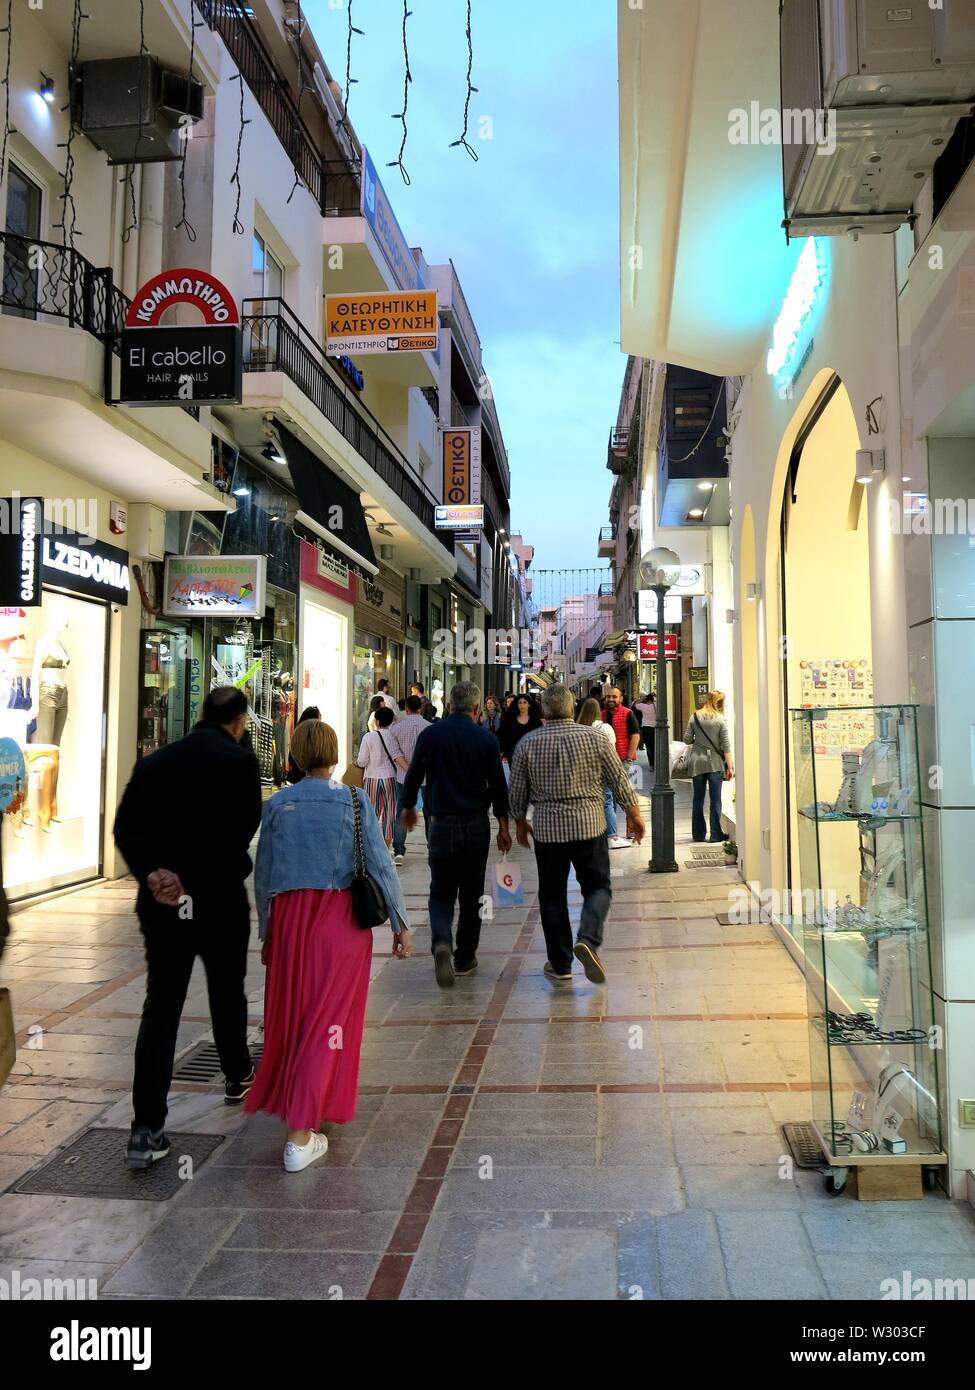 People walking along Daidalou street, doing their shopping, Heraklion,  Crete, Greece Stock Photo - Alamy